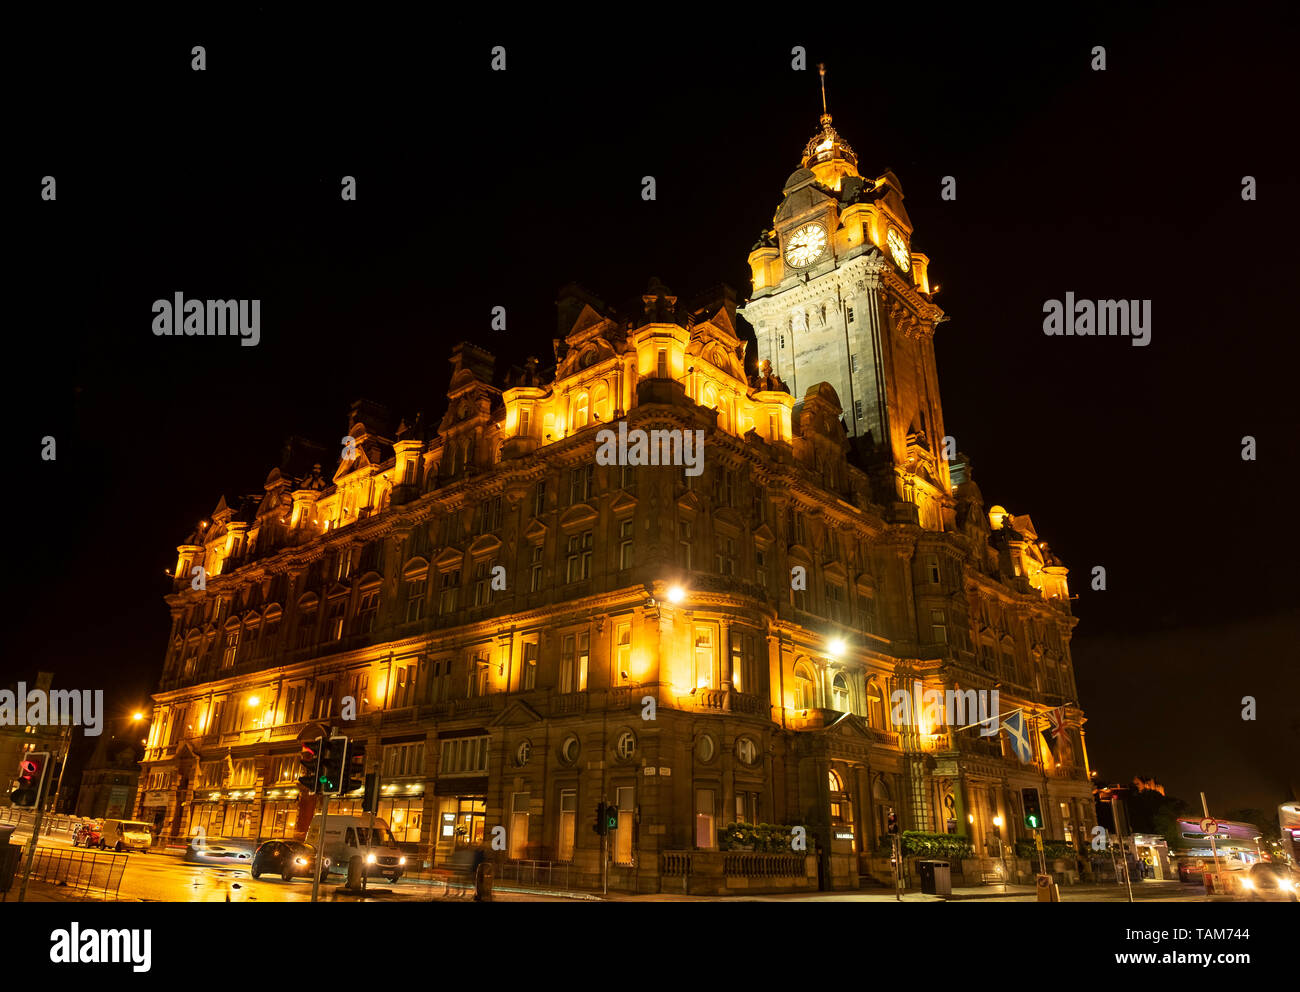 The Balmoral landmark victorian hotel at night, Edinburgh New Town, City Centre, Scotland UK Stock Photo